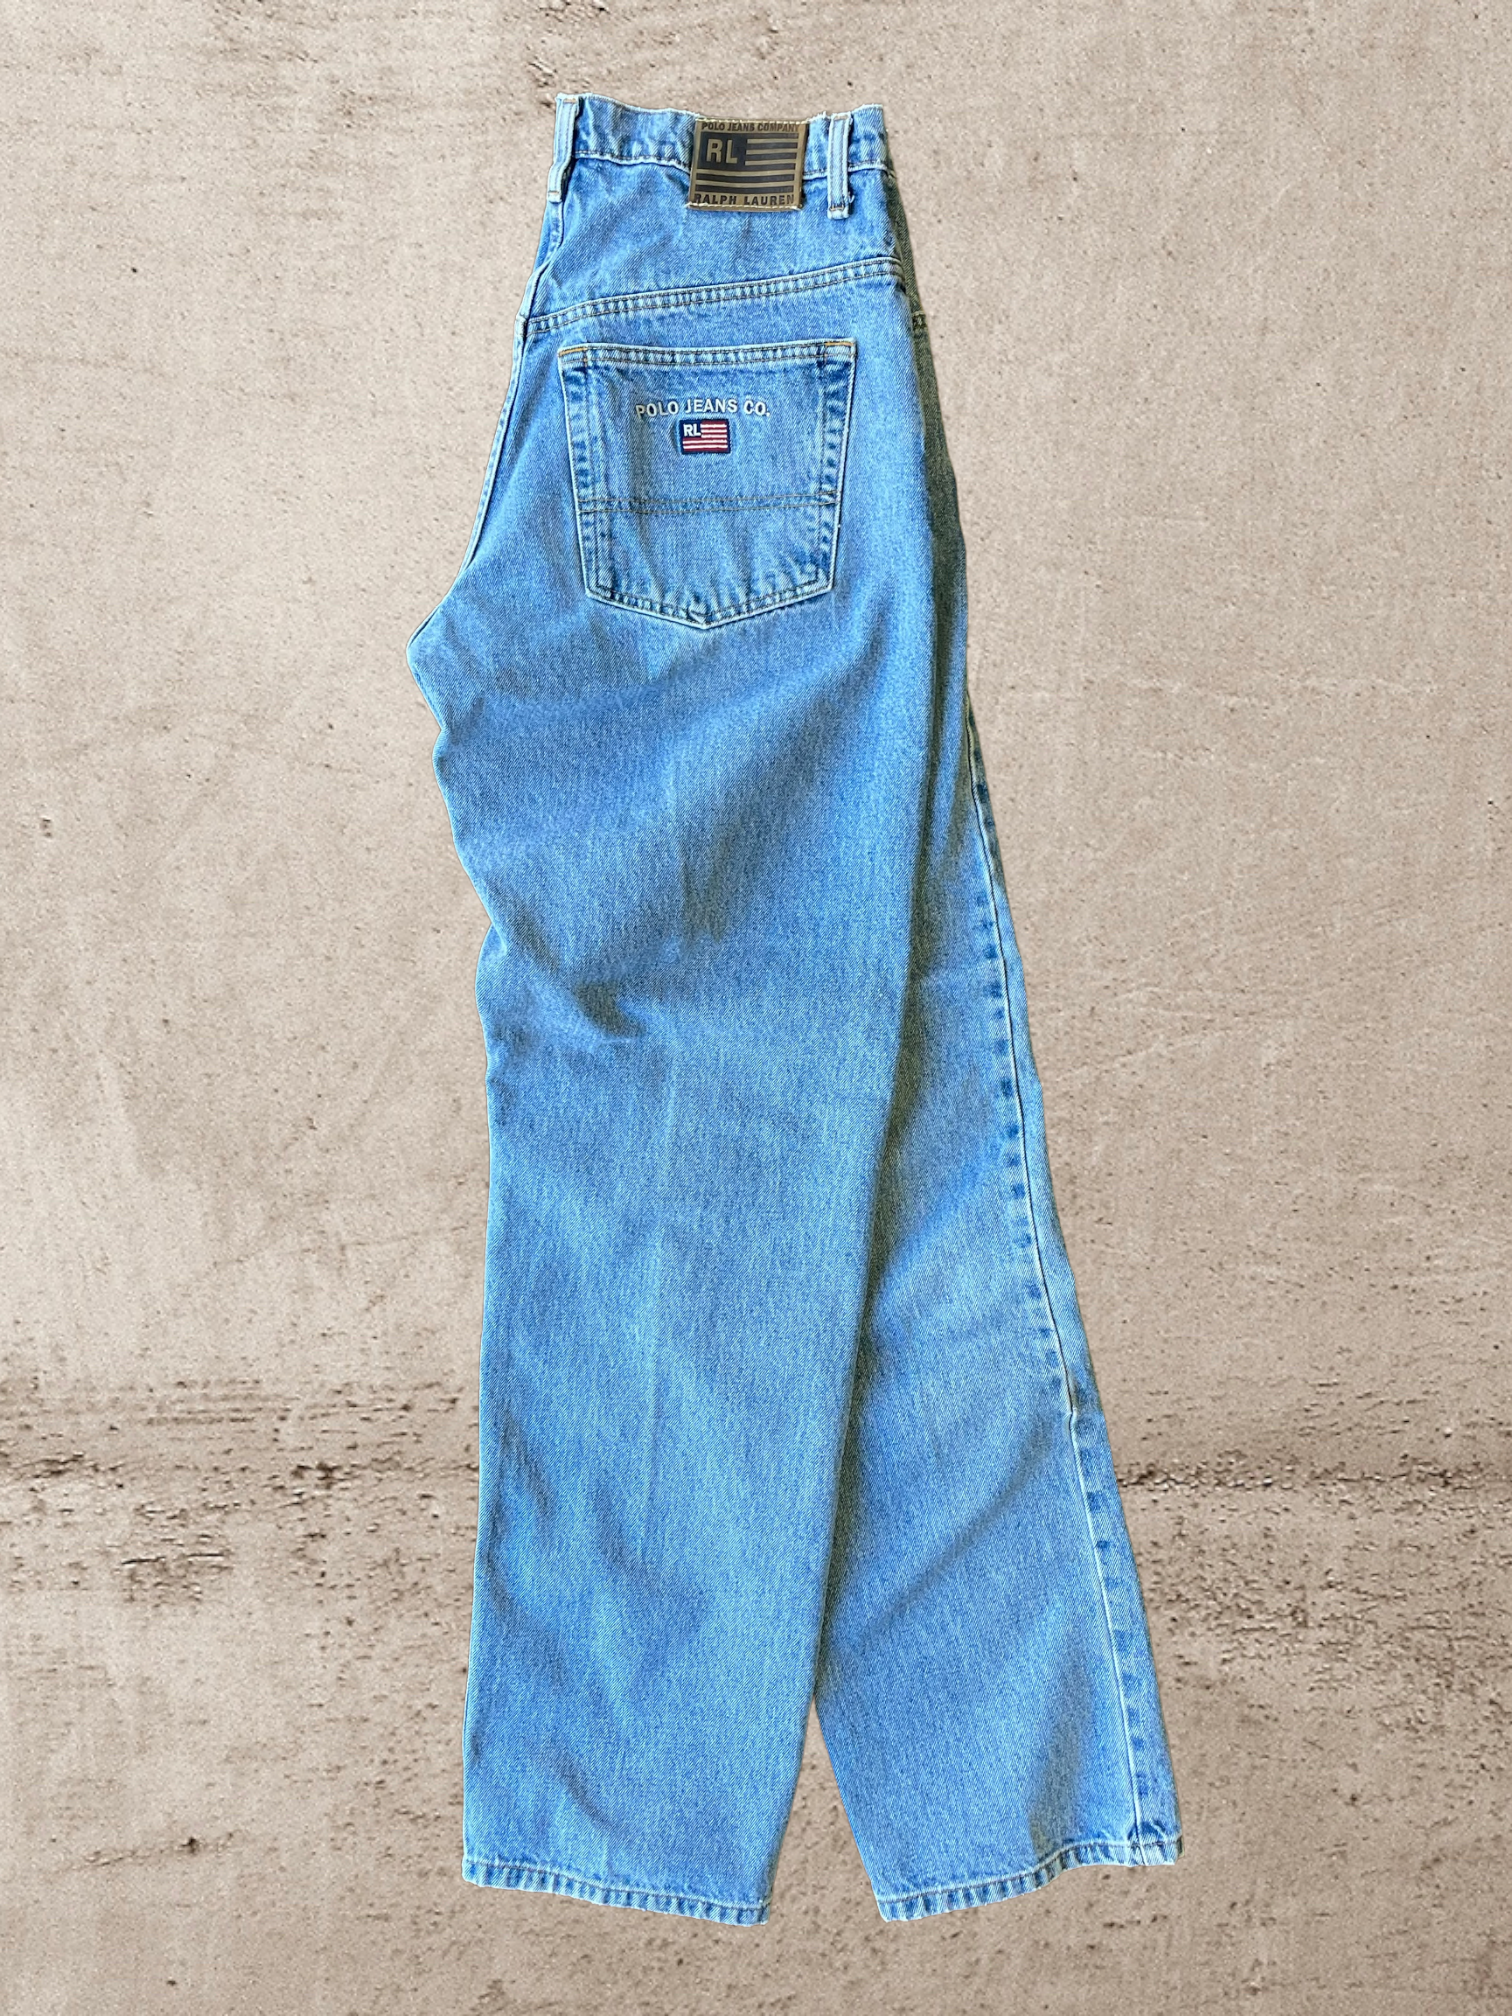 90s Polo Ralph Lauren Jeans - 32x33